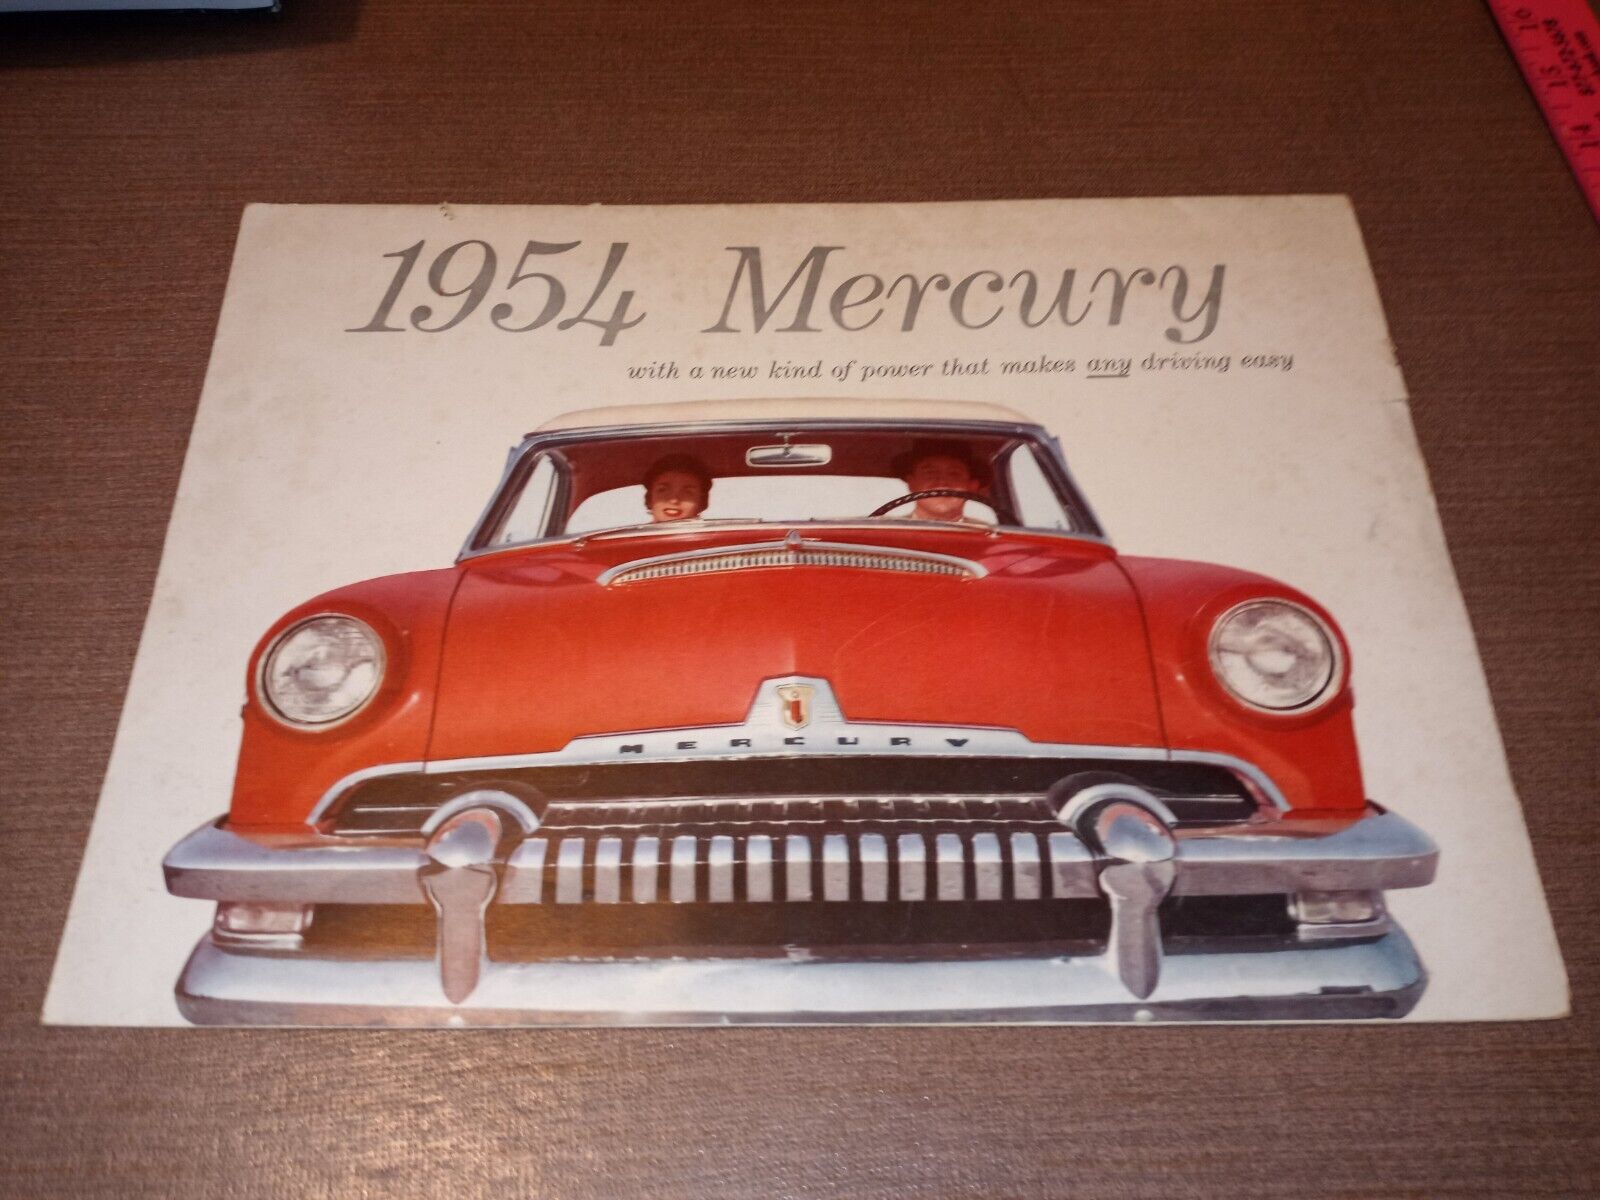 1954 Mercury Full Line Foldout Sales Brochure - Original